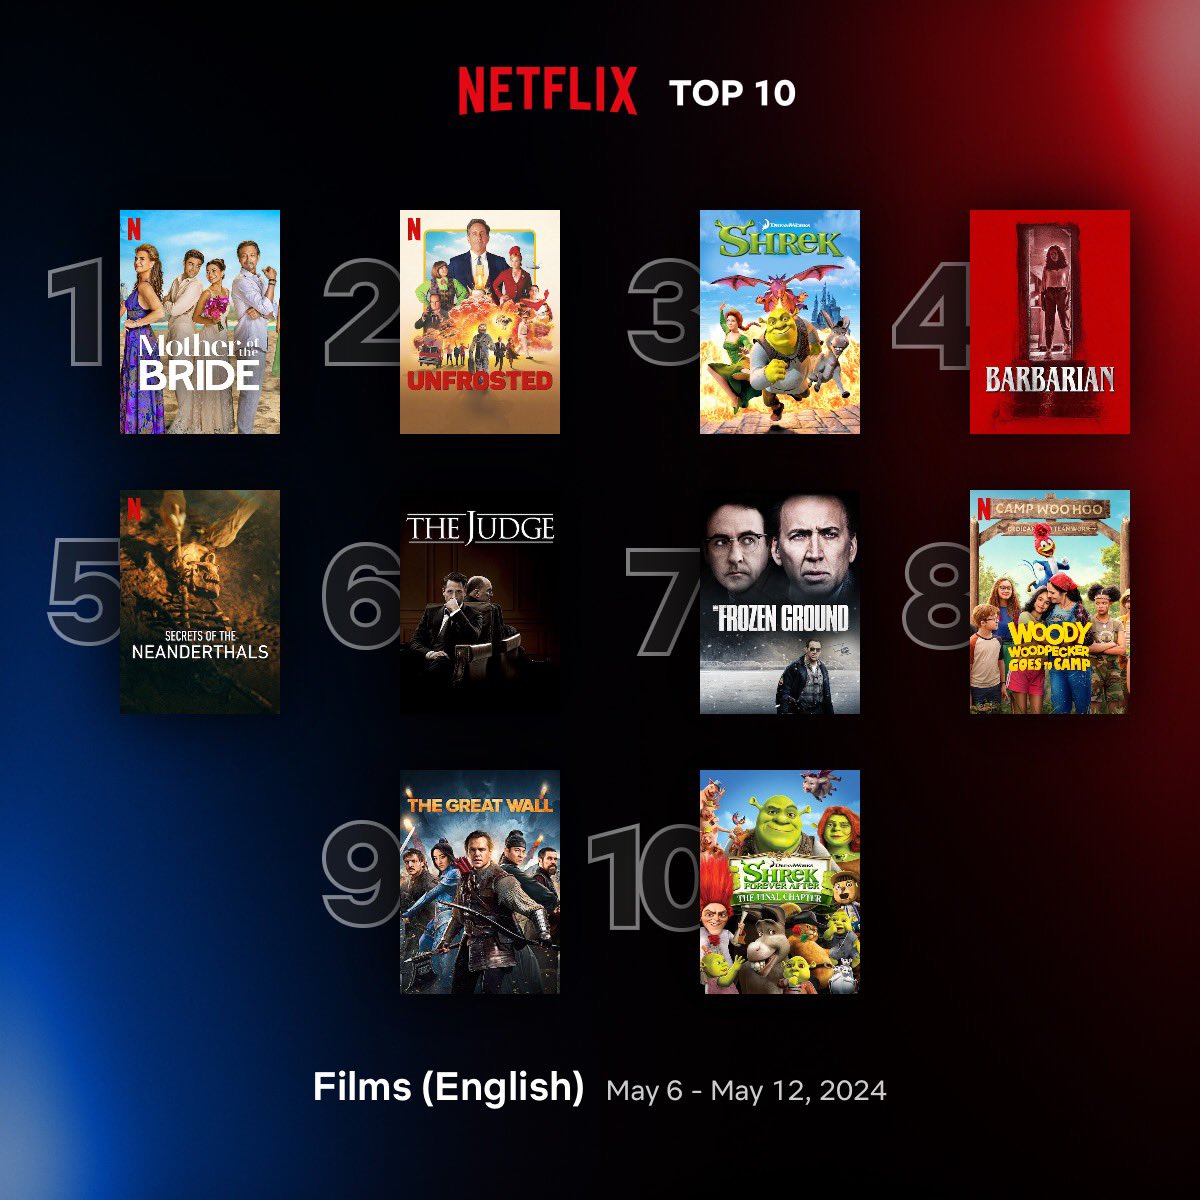 Global Top 10 English Films on Netflix between 6 - 12 May 1. #MotherOfTheBride 2. #Unfrosted 3. #Shrek 4. #Barbarian 5. #SecretsOfTheNeanderthals 6. #TheJudge 7. #TheFrozenGround 8. #WoodyWoodpeckerGoesToCamp 9. #TheGreatWall 10. #ShrekForeverAfter